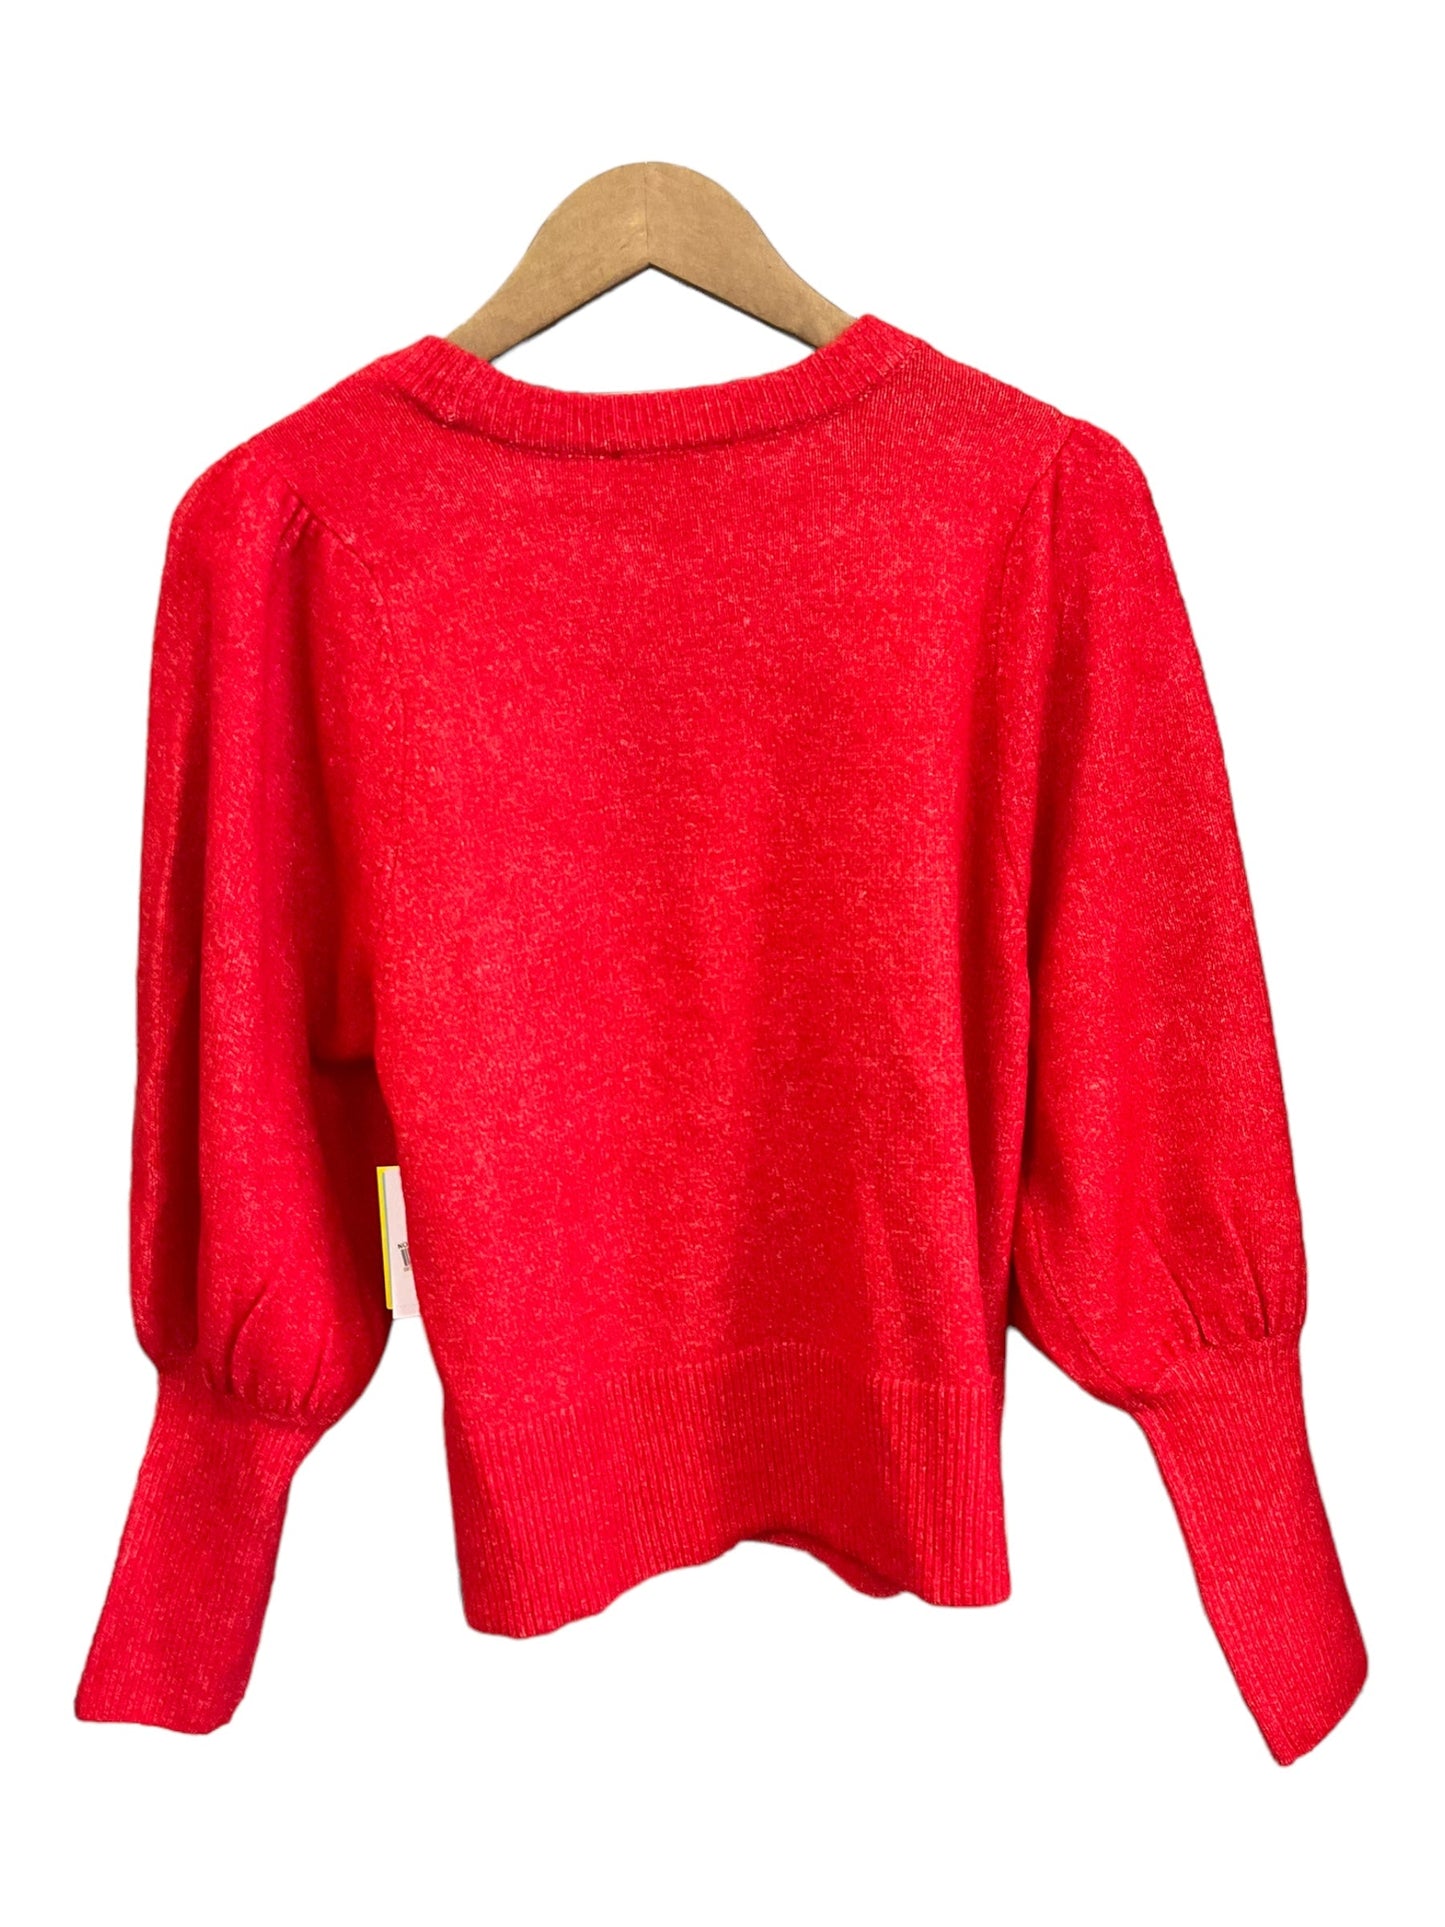 Sweater By Cece  Size: M